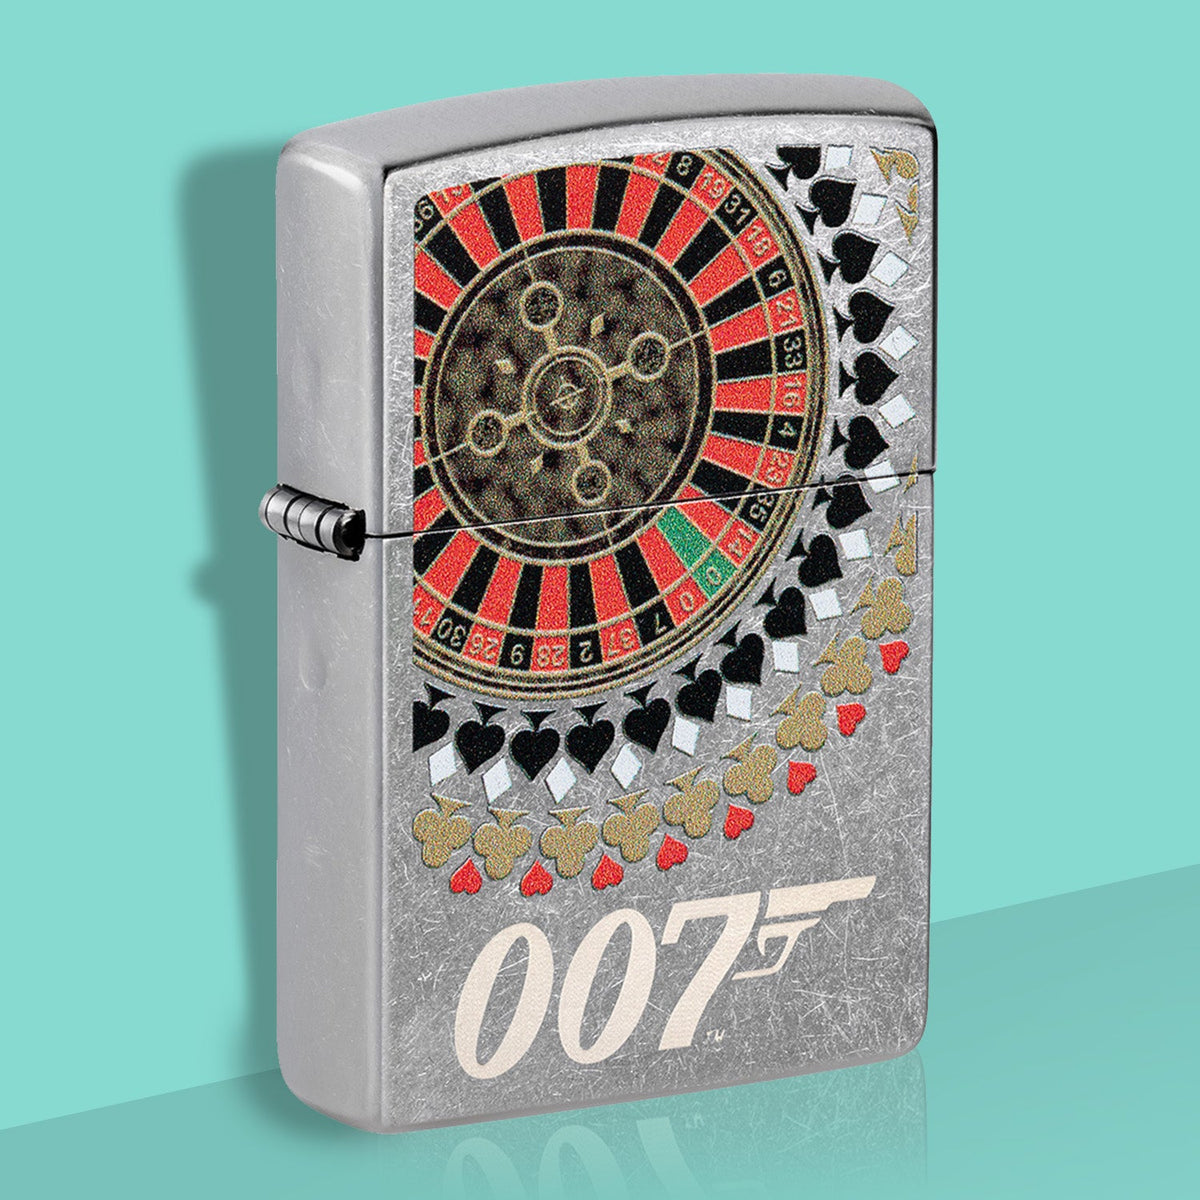 James Bond Zippo Lighter - Casino Royale Roulette Edition